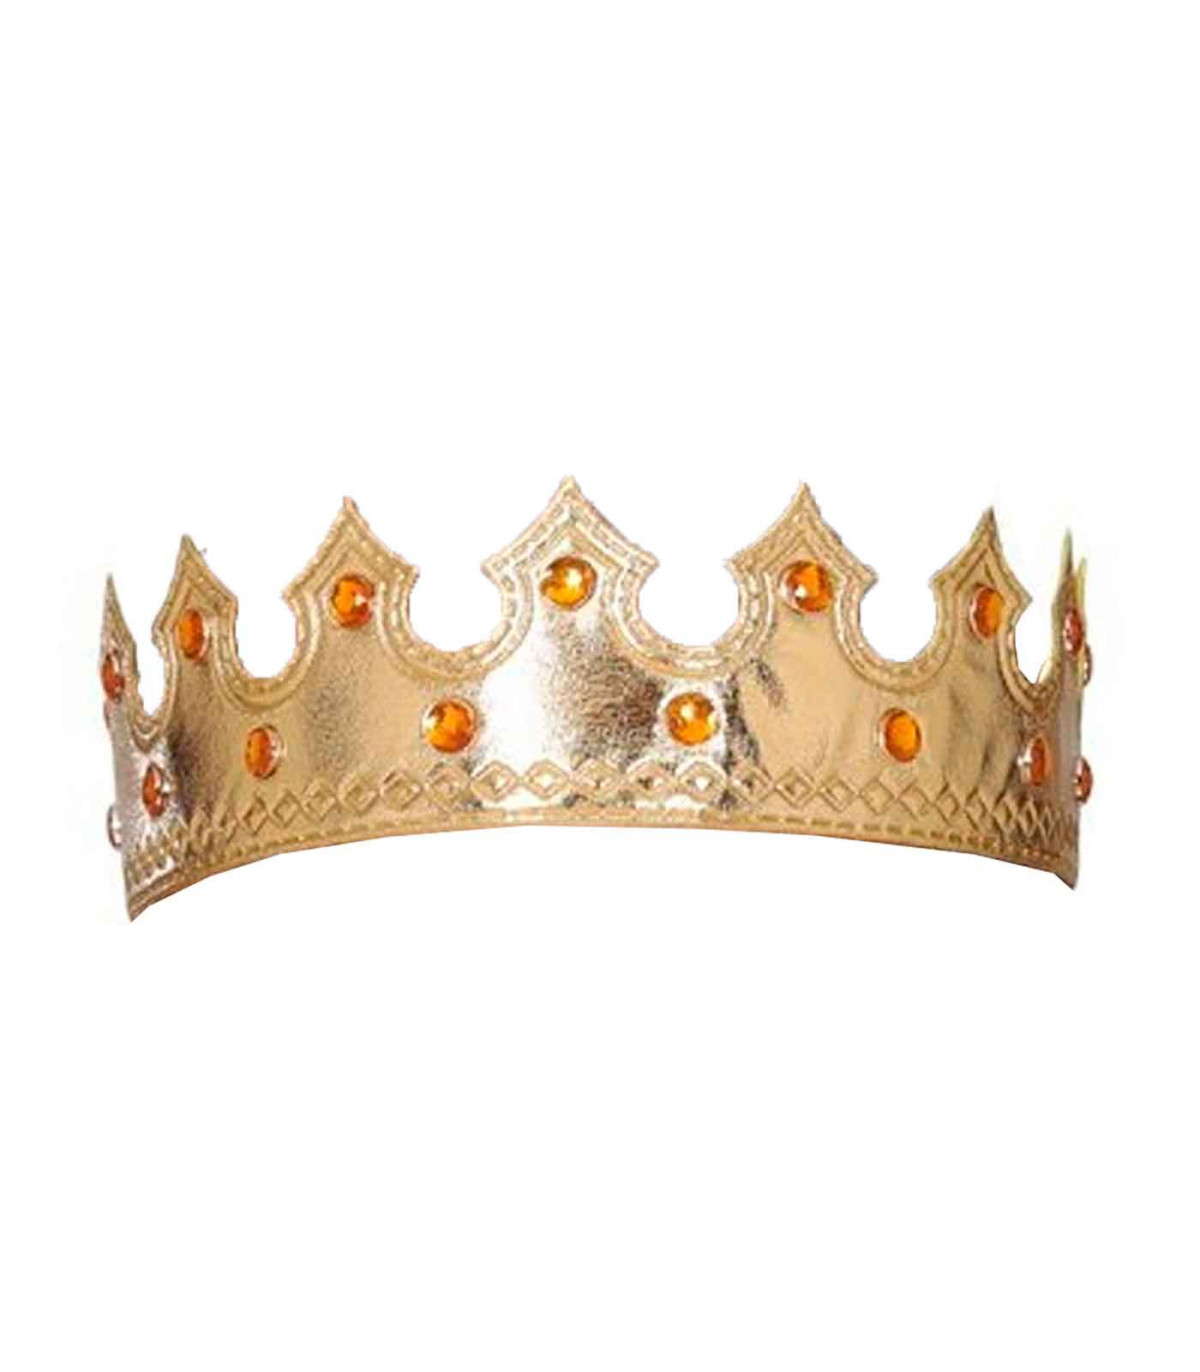 Corona de Rey Dorada de 55 cm